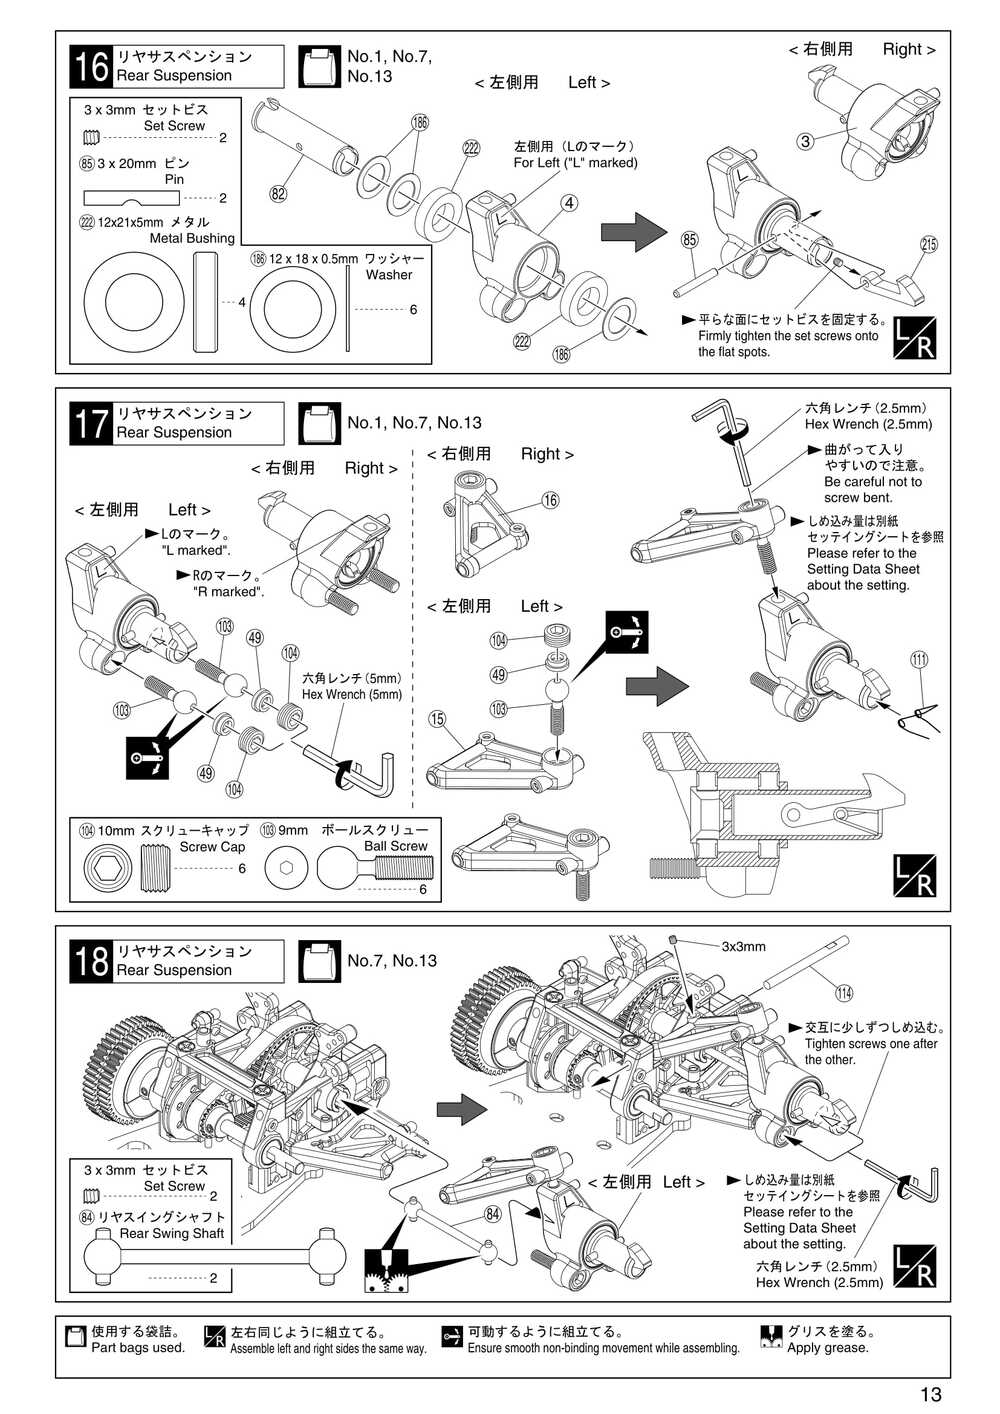 Kyosho - 31041 - Fantom Sports - Manual - Page 13